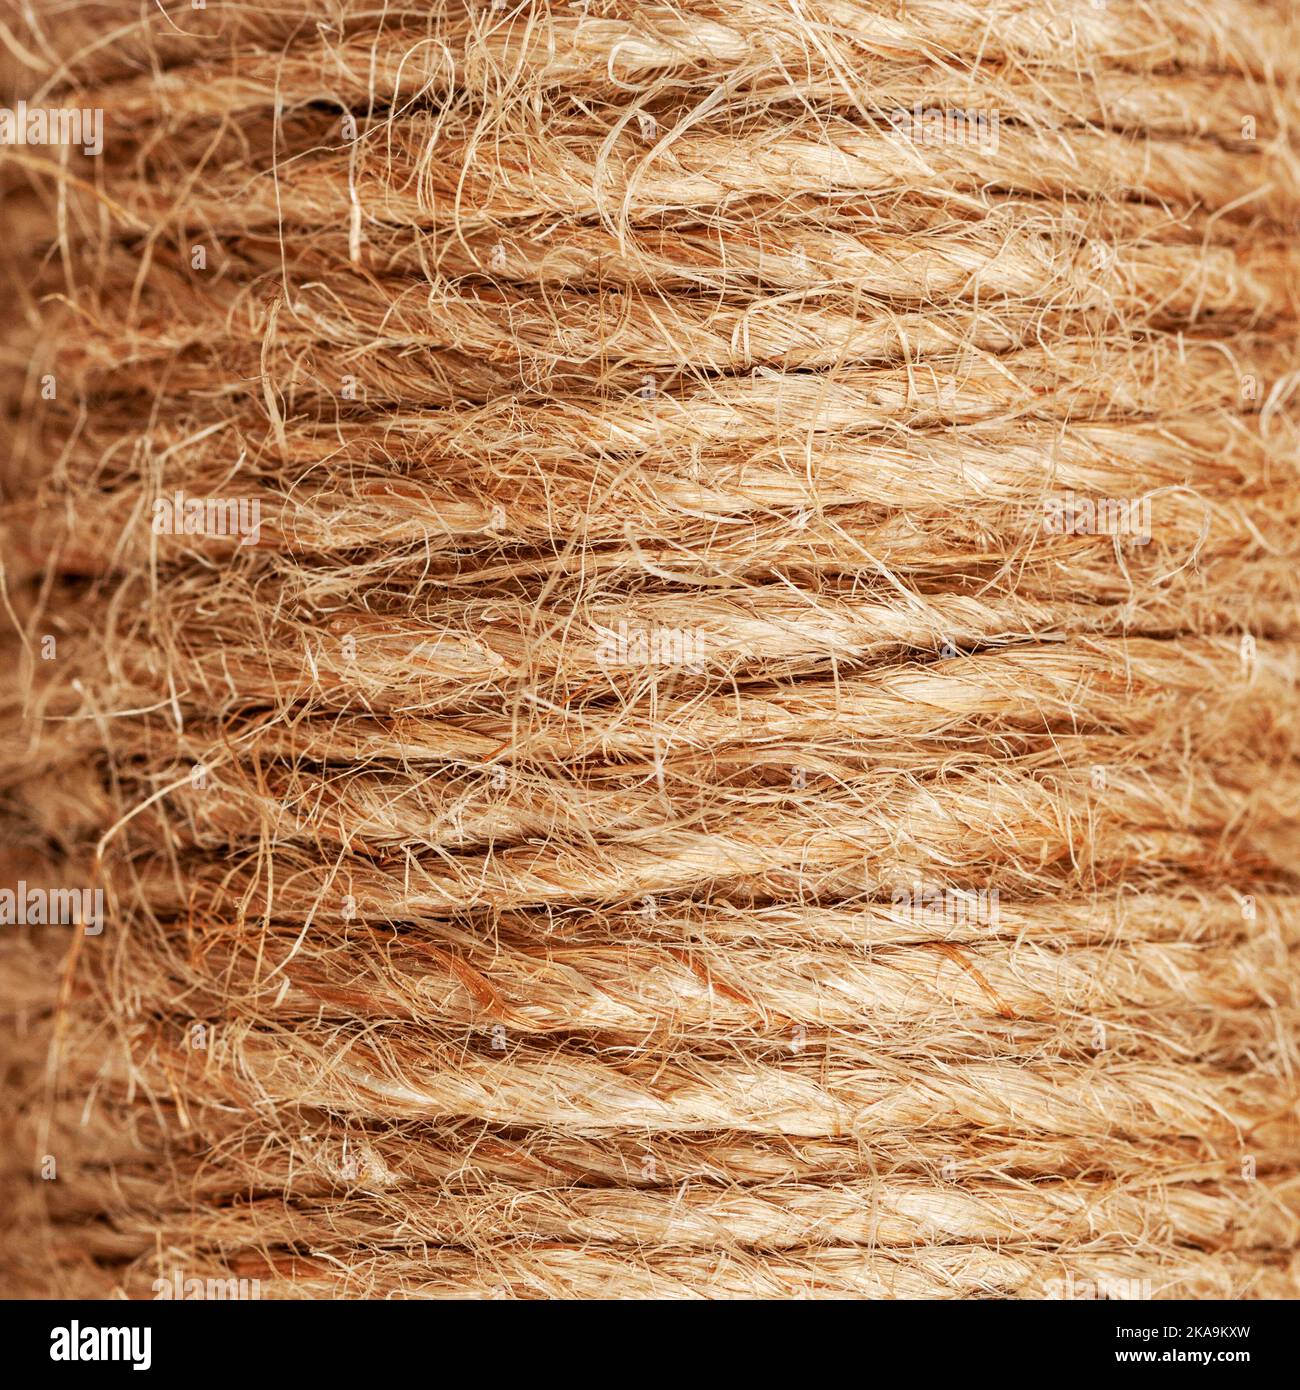 Natural rope stock image. Image of fiber, natural, hanging - 60180297